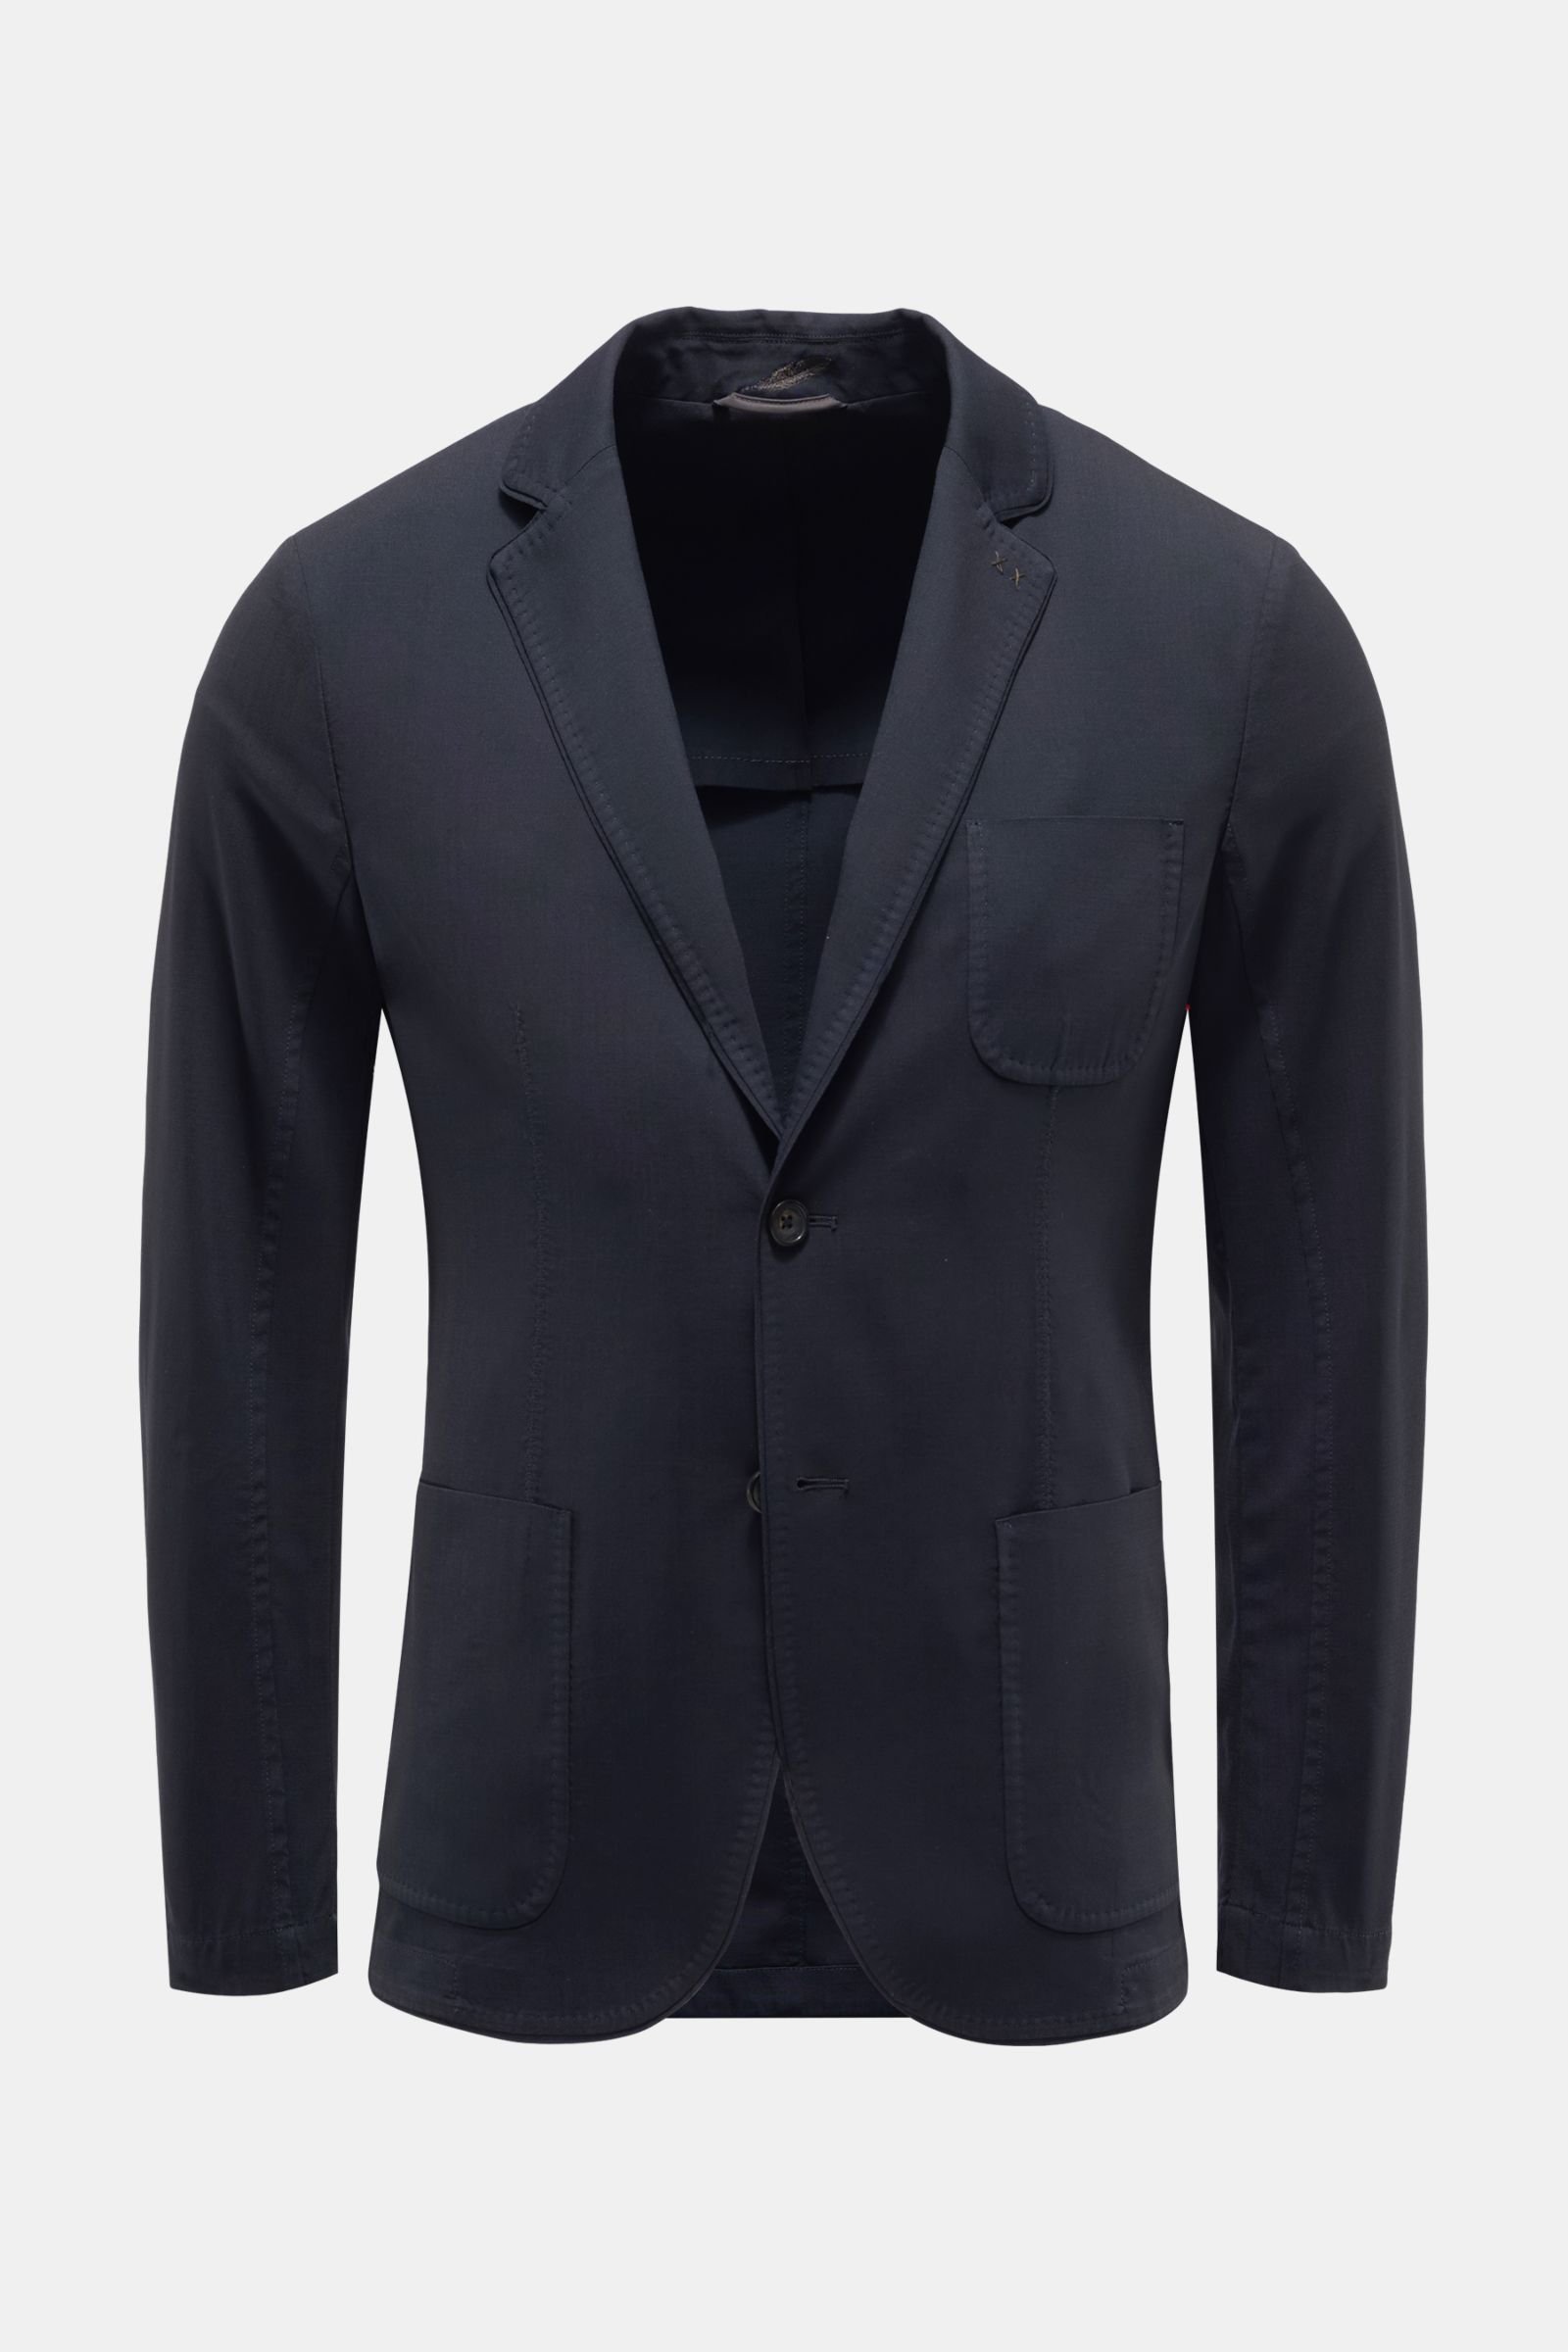 Smart-casual jacket 'Vintage Fresco Classic' dark navy